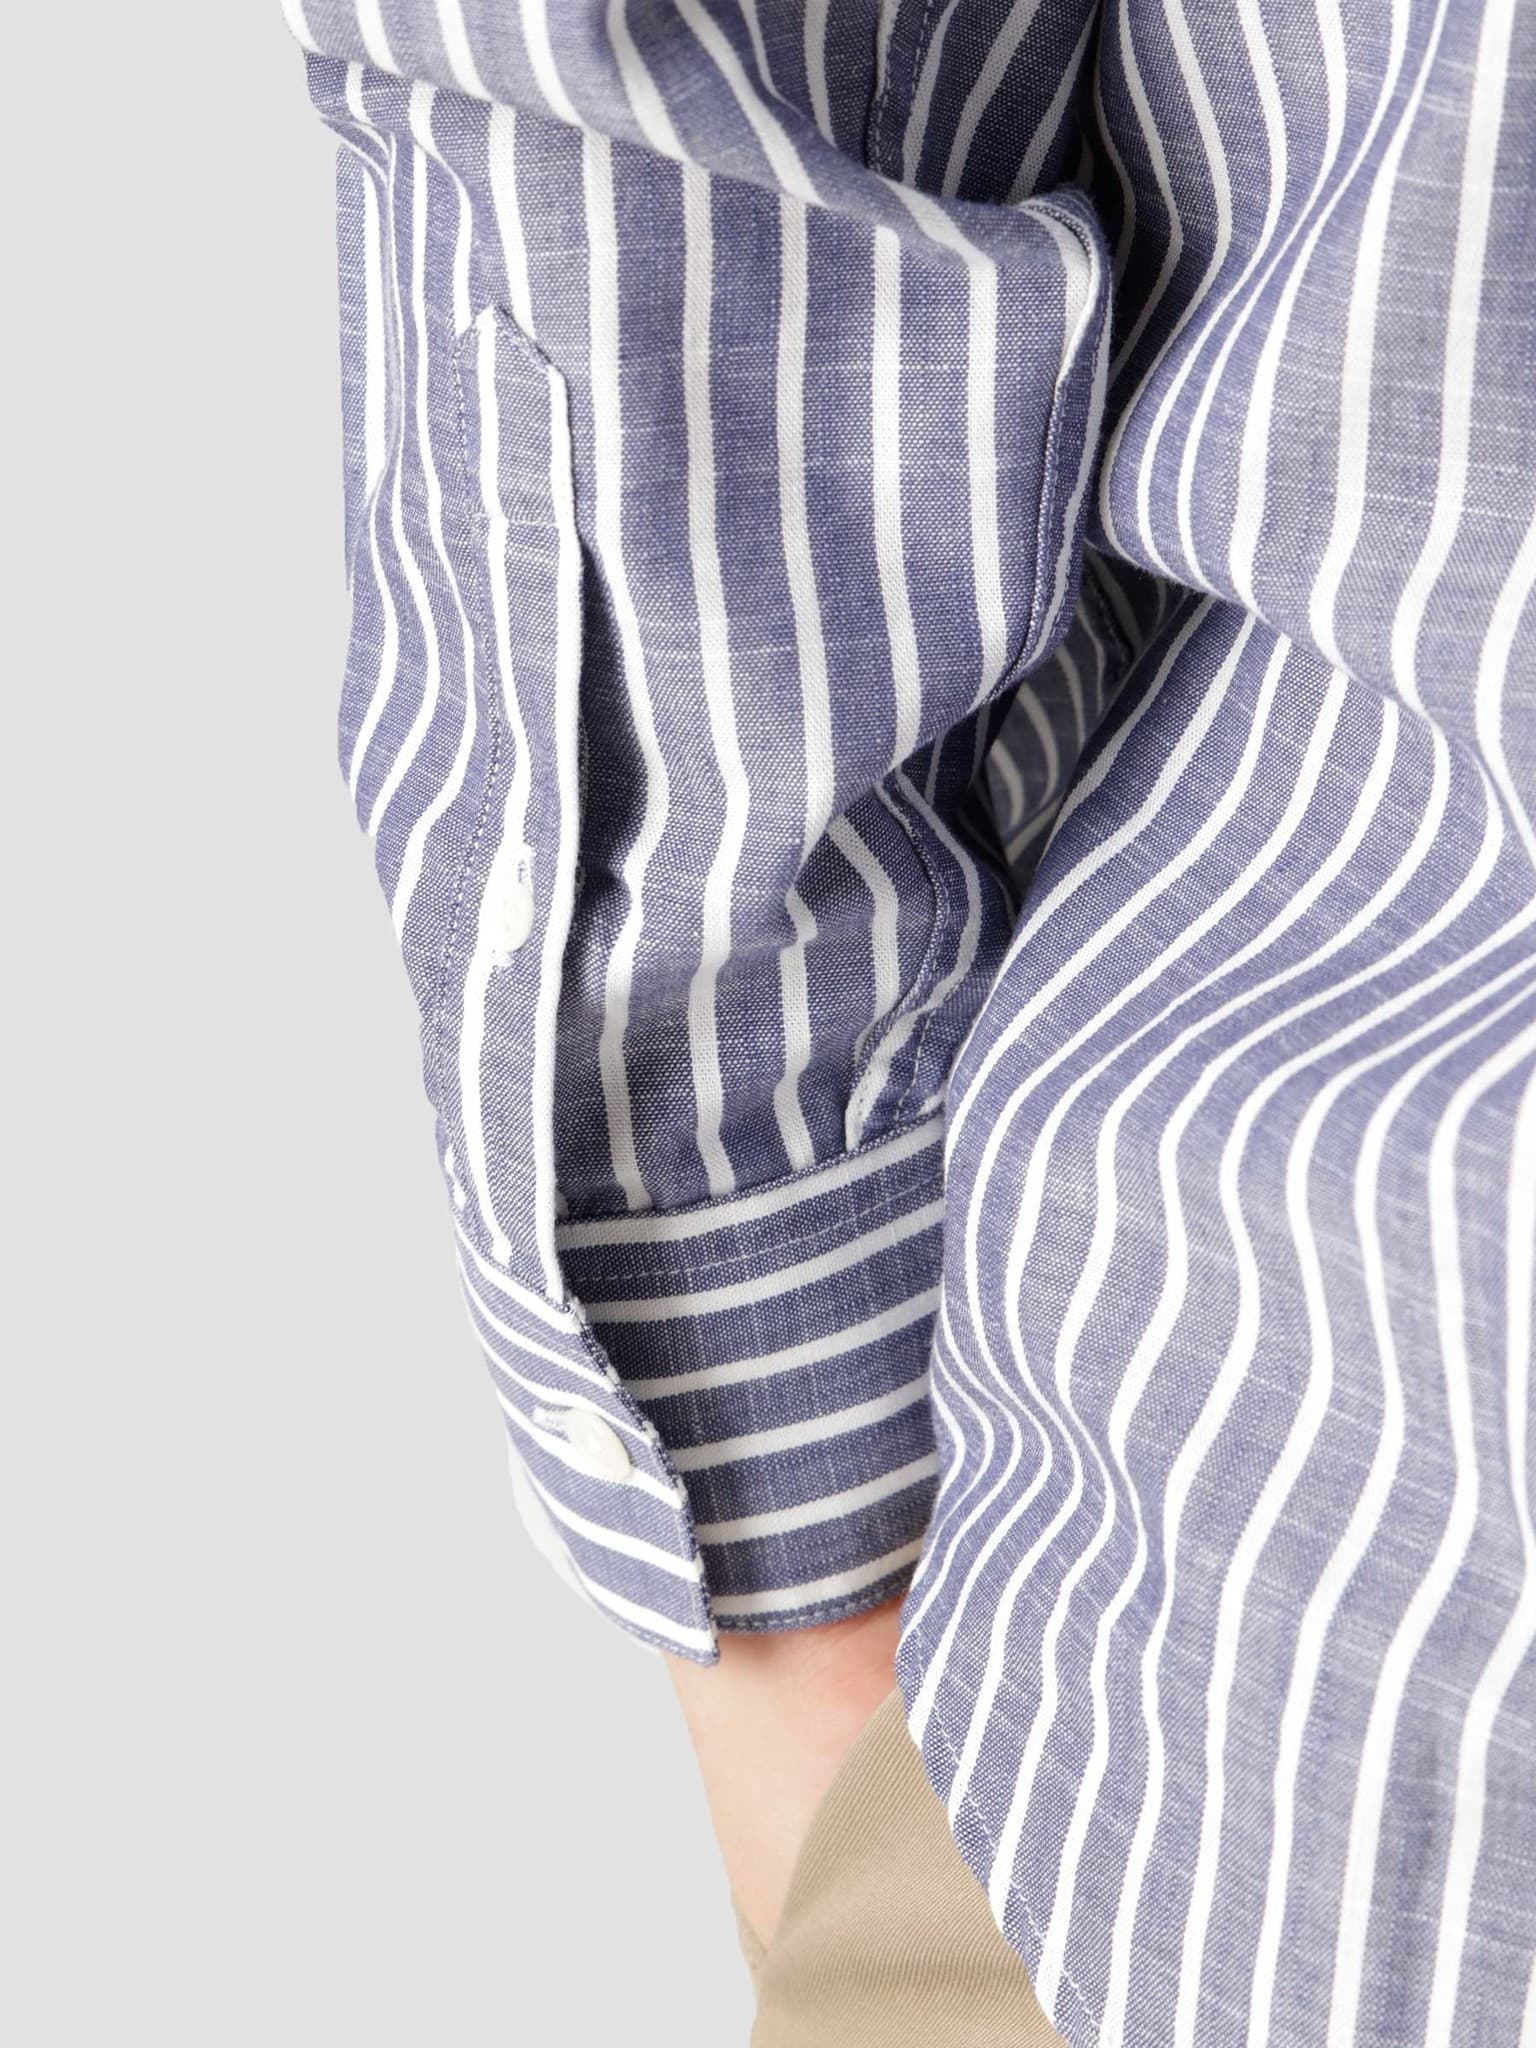 QB44 Stripe Shirt Blue White Regular Stripes